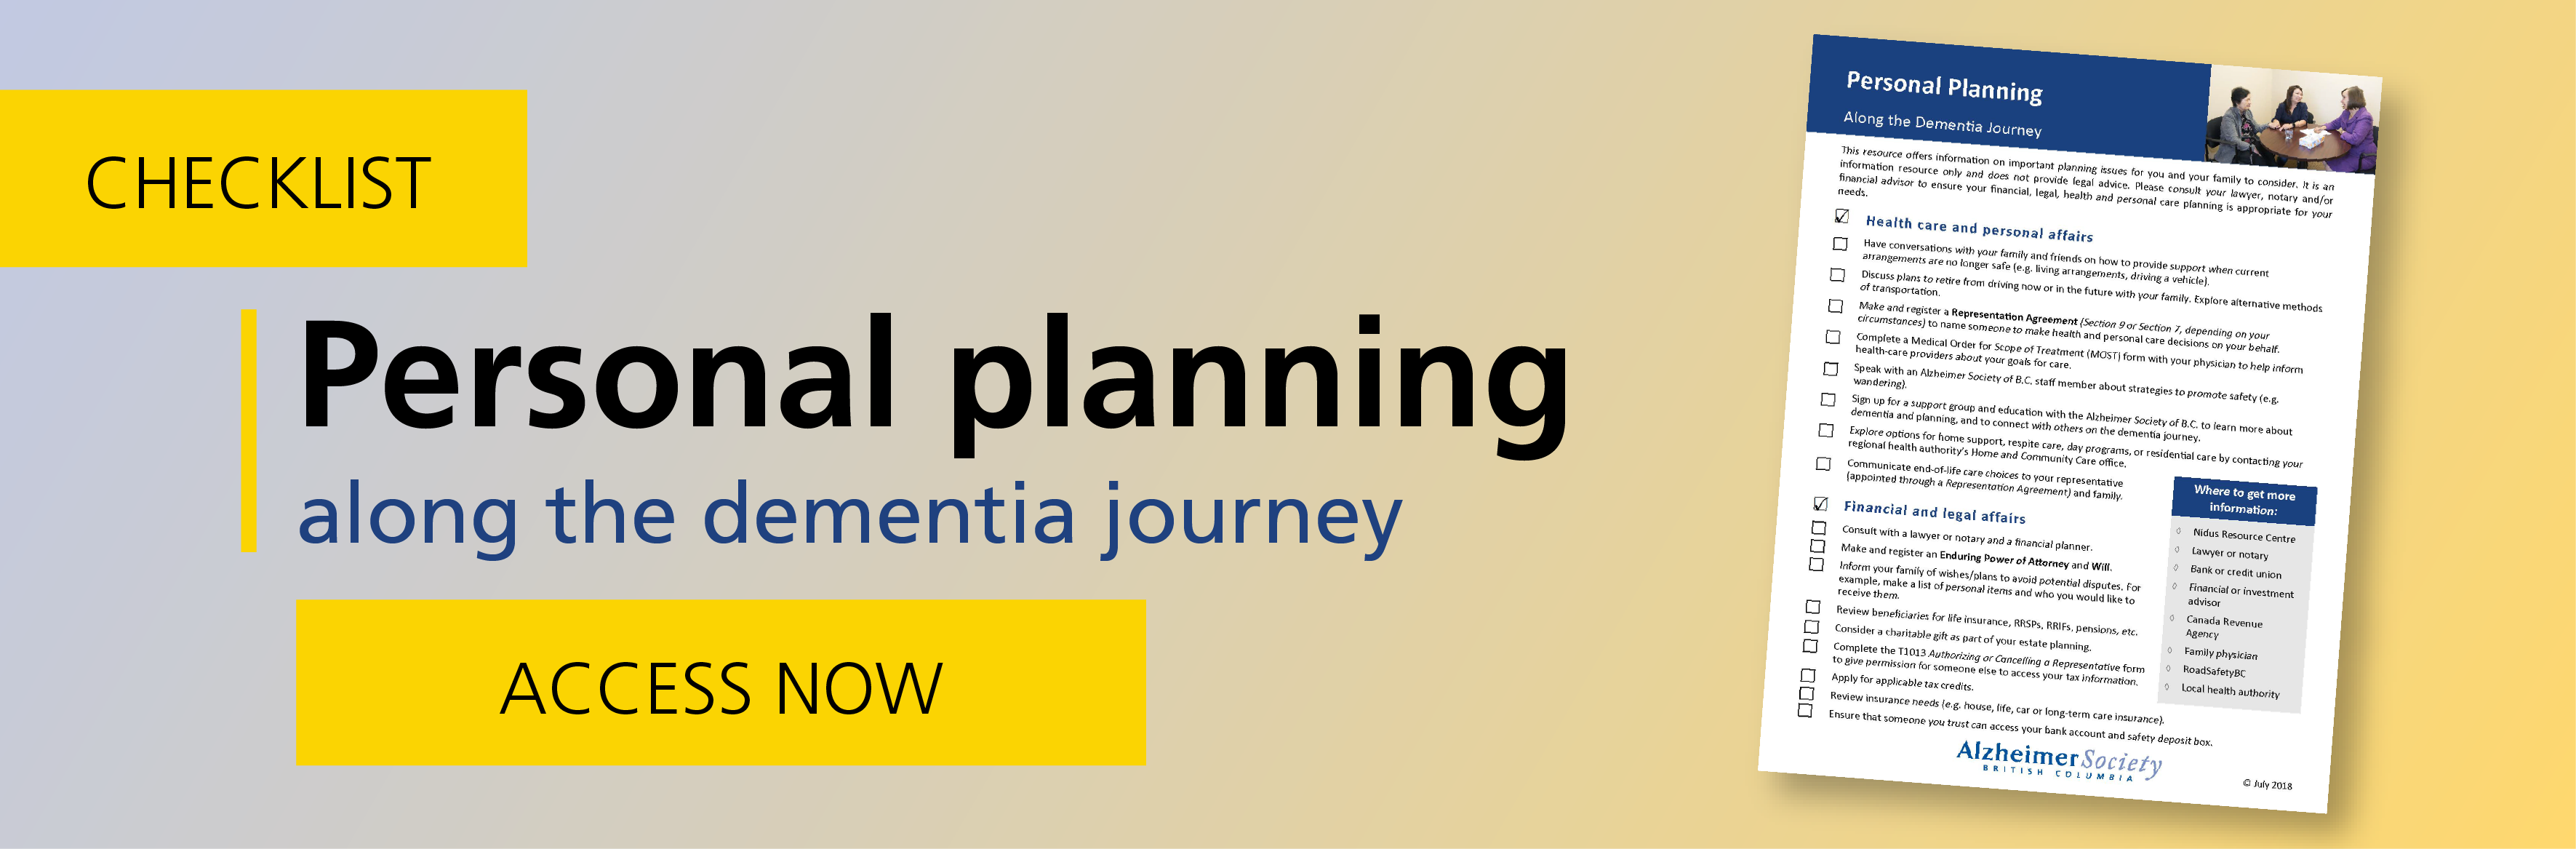 Personal planning checklist download